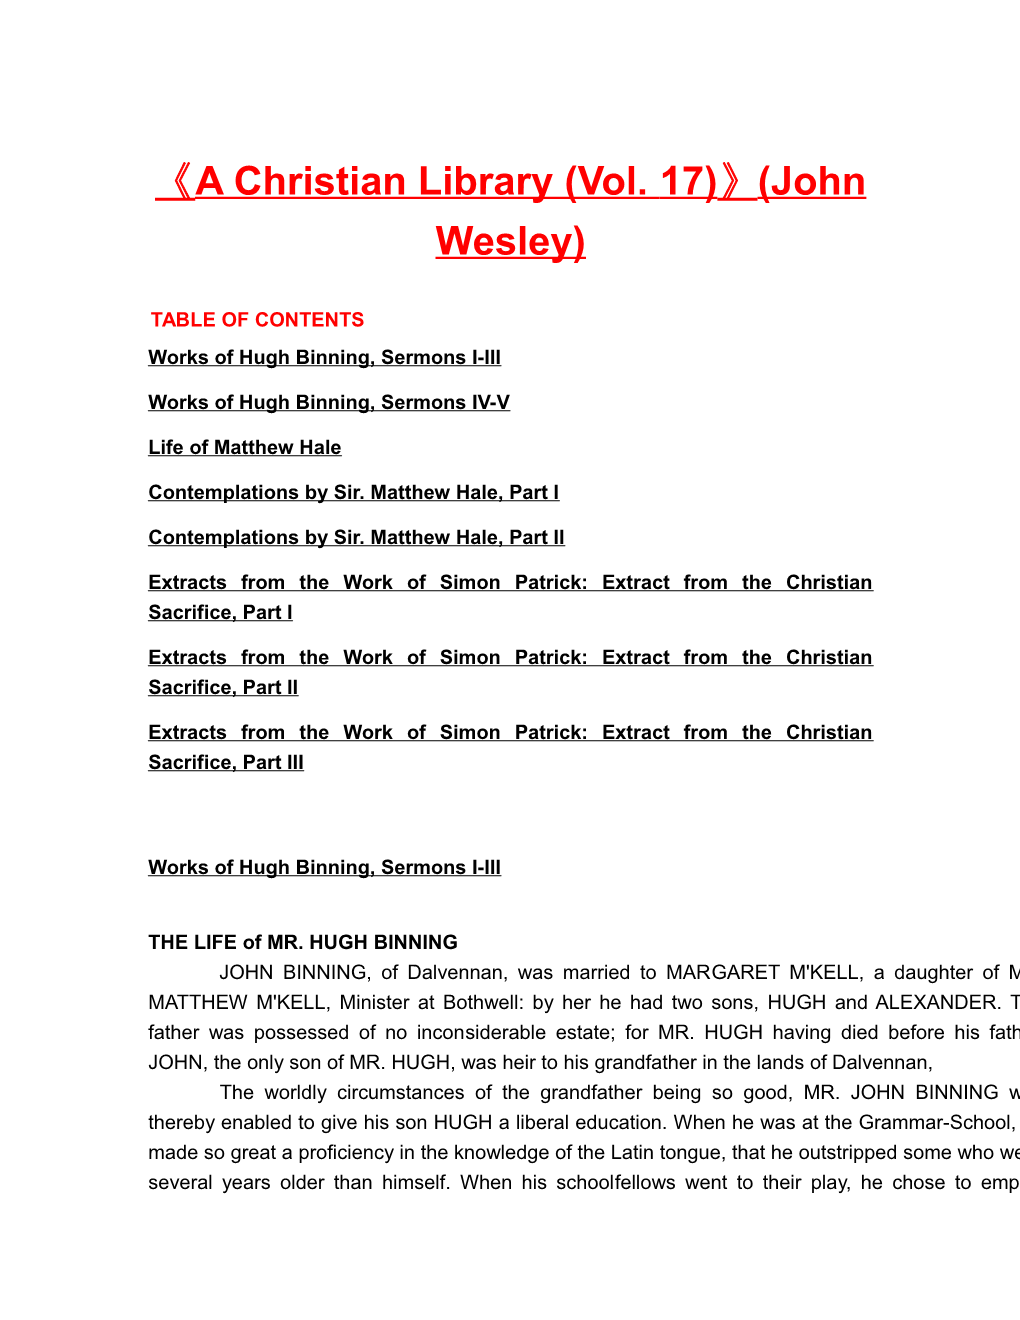 A Christian Library (Vol. 17) (John Wesley)